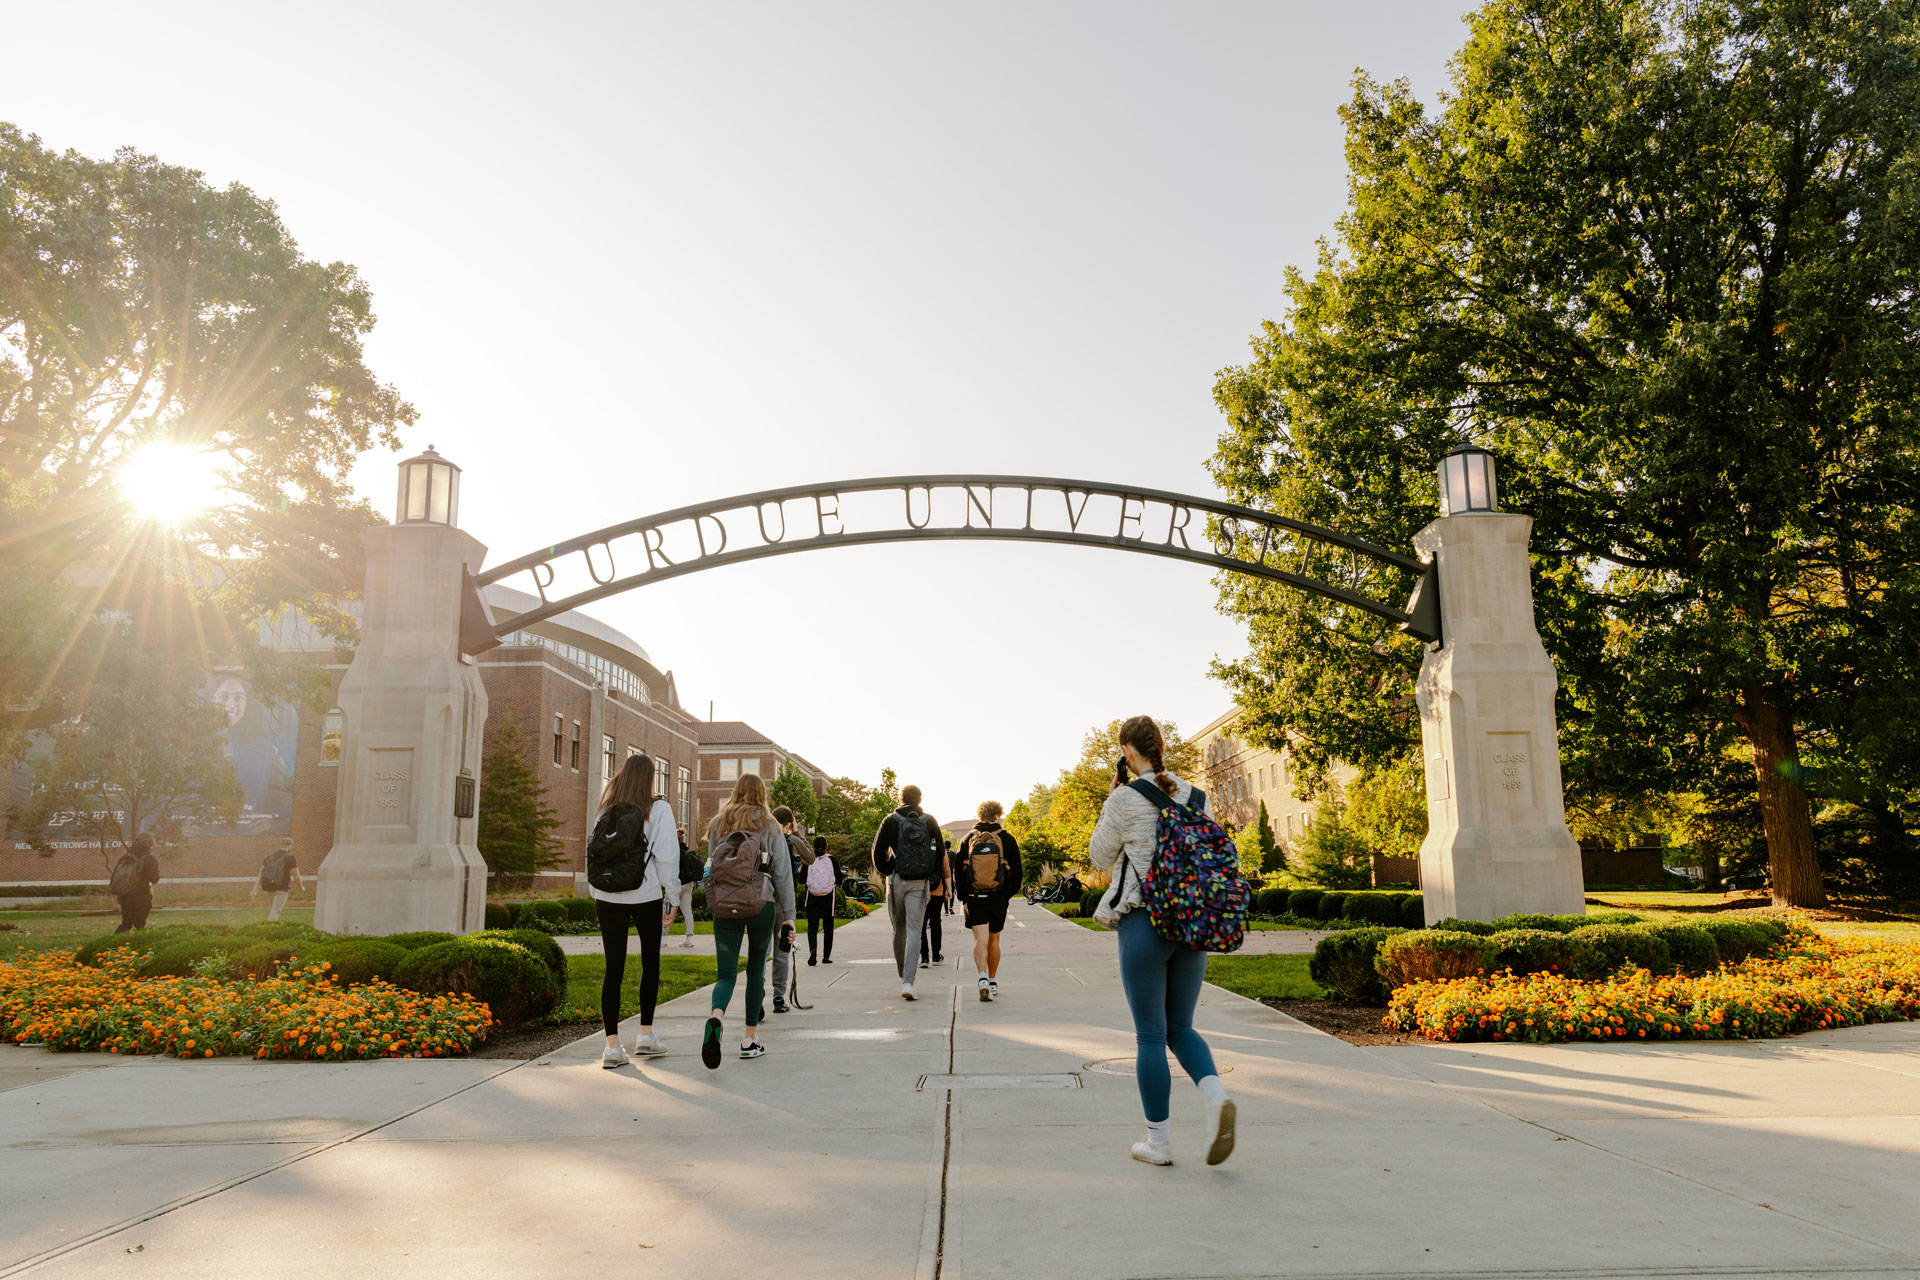 Students walk under the "Purdue University" arch